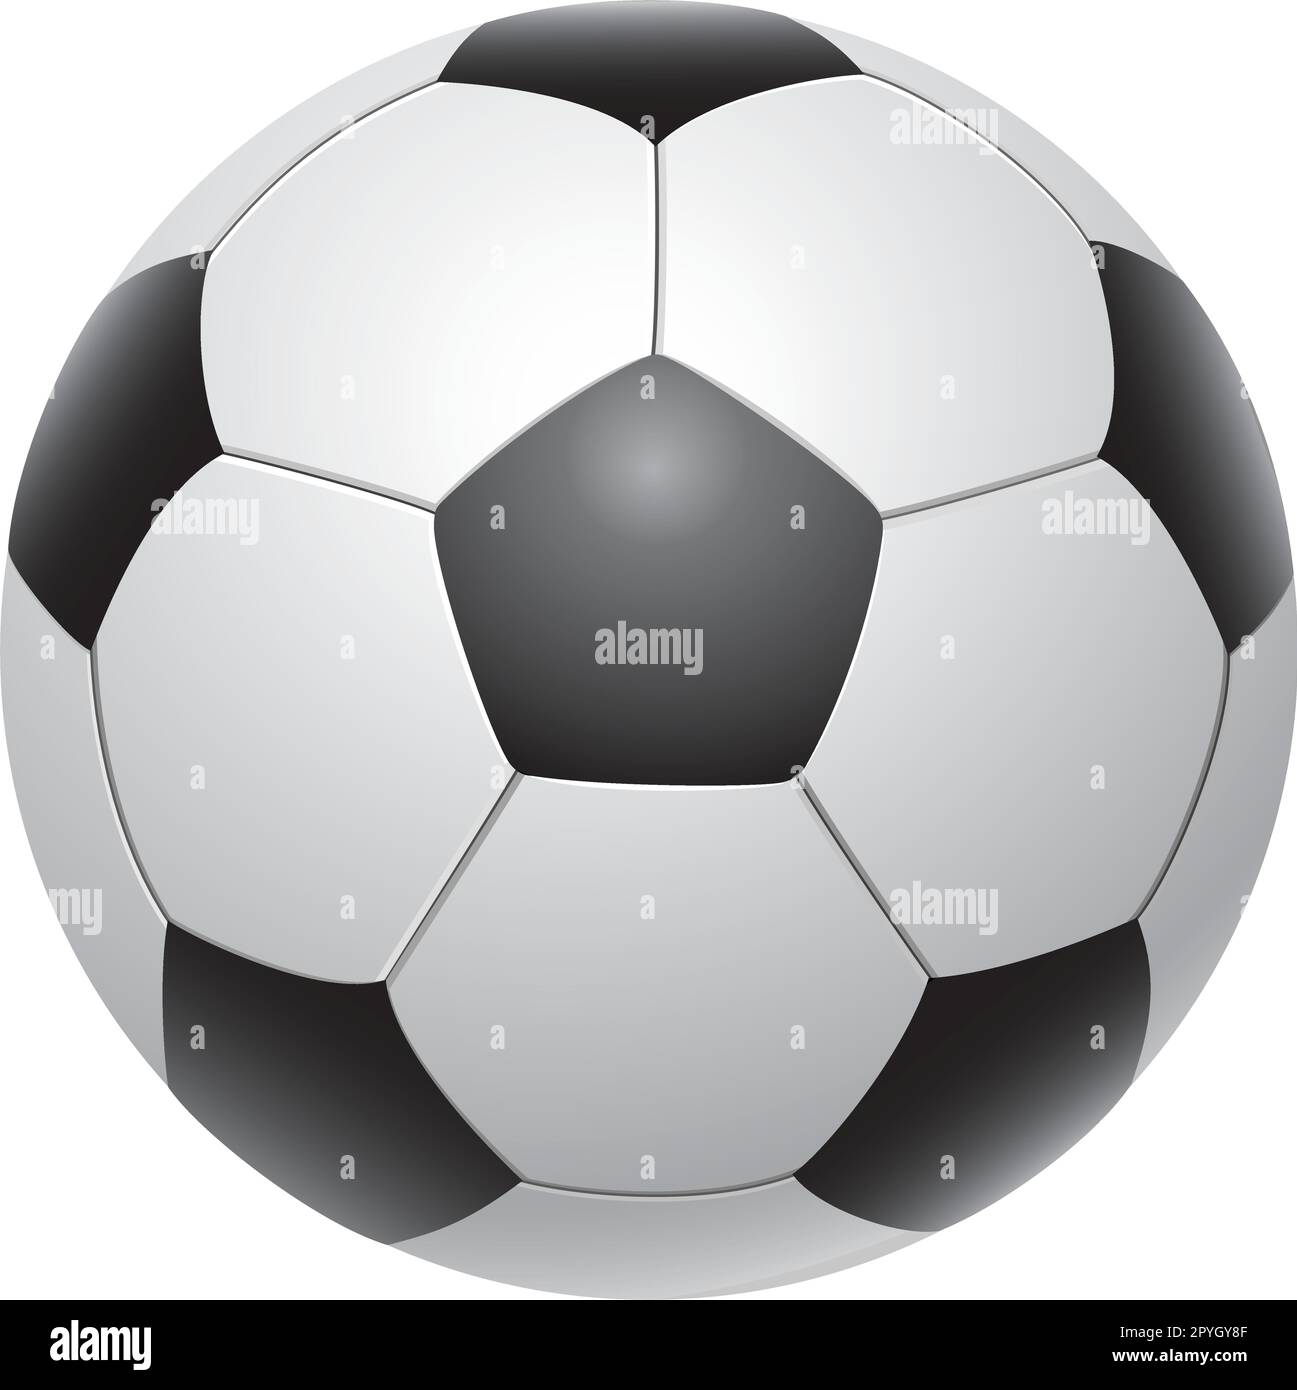 Soccer Ball, photorealistic editable vector art - Saved as Illustrator 6.0 for optimum compatibility. Stock Vector